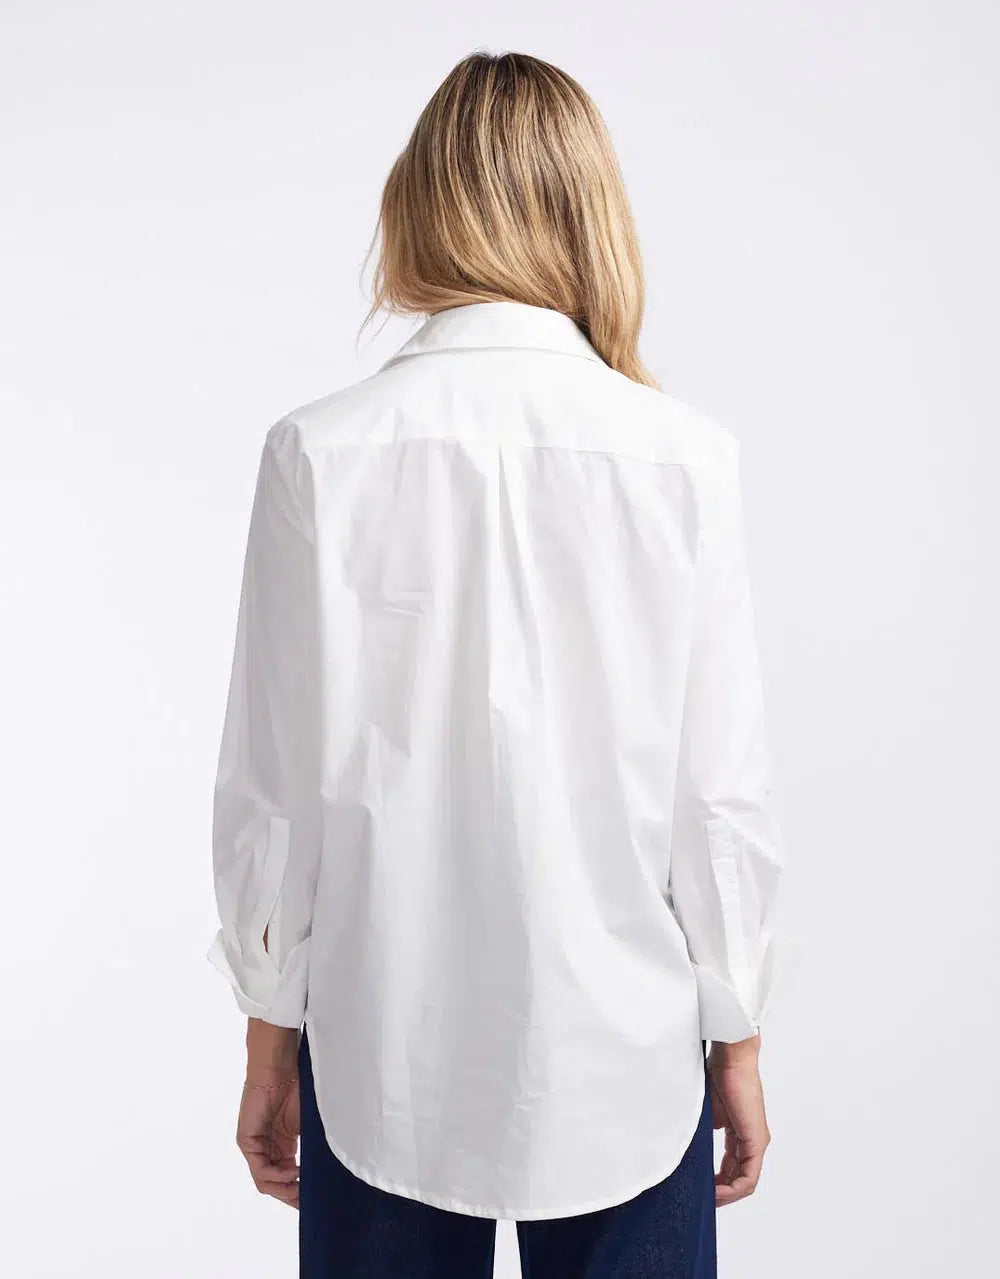 Classic White Shirt - White-365 Days-Lima & Co